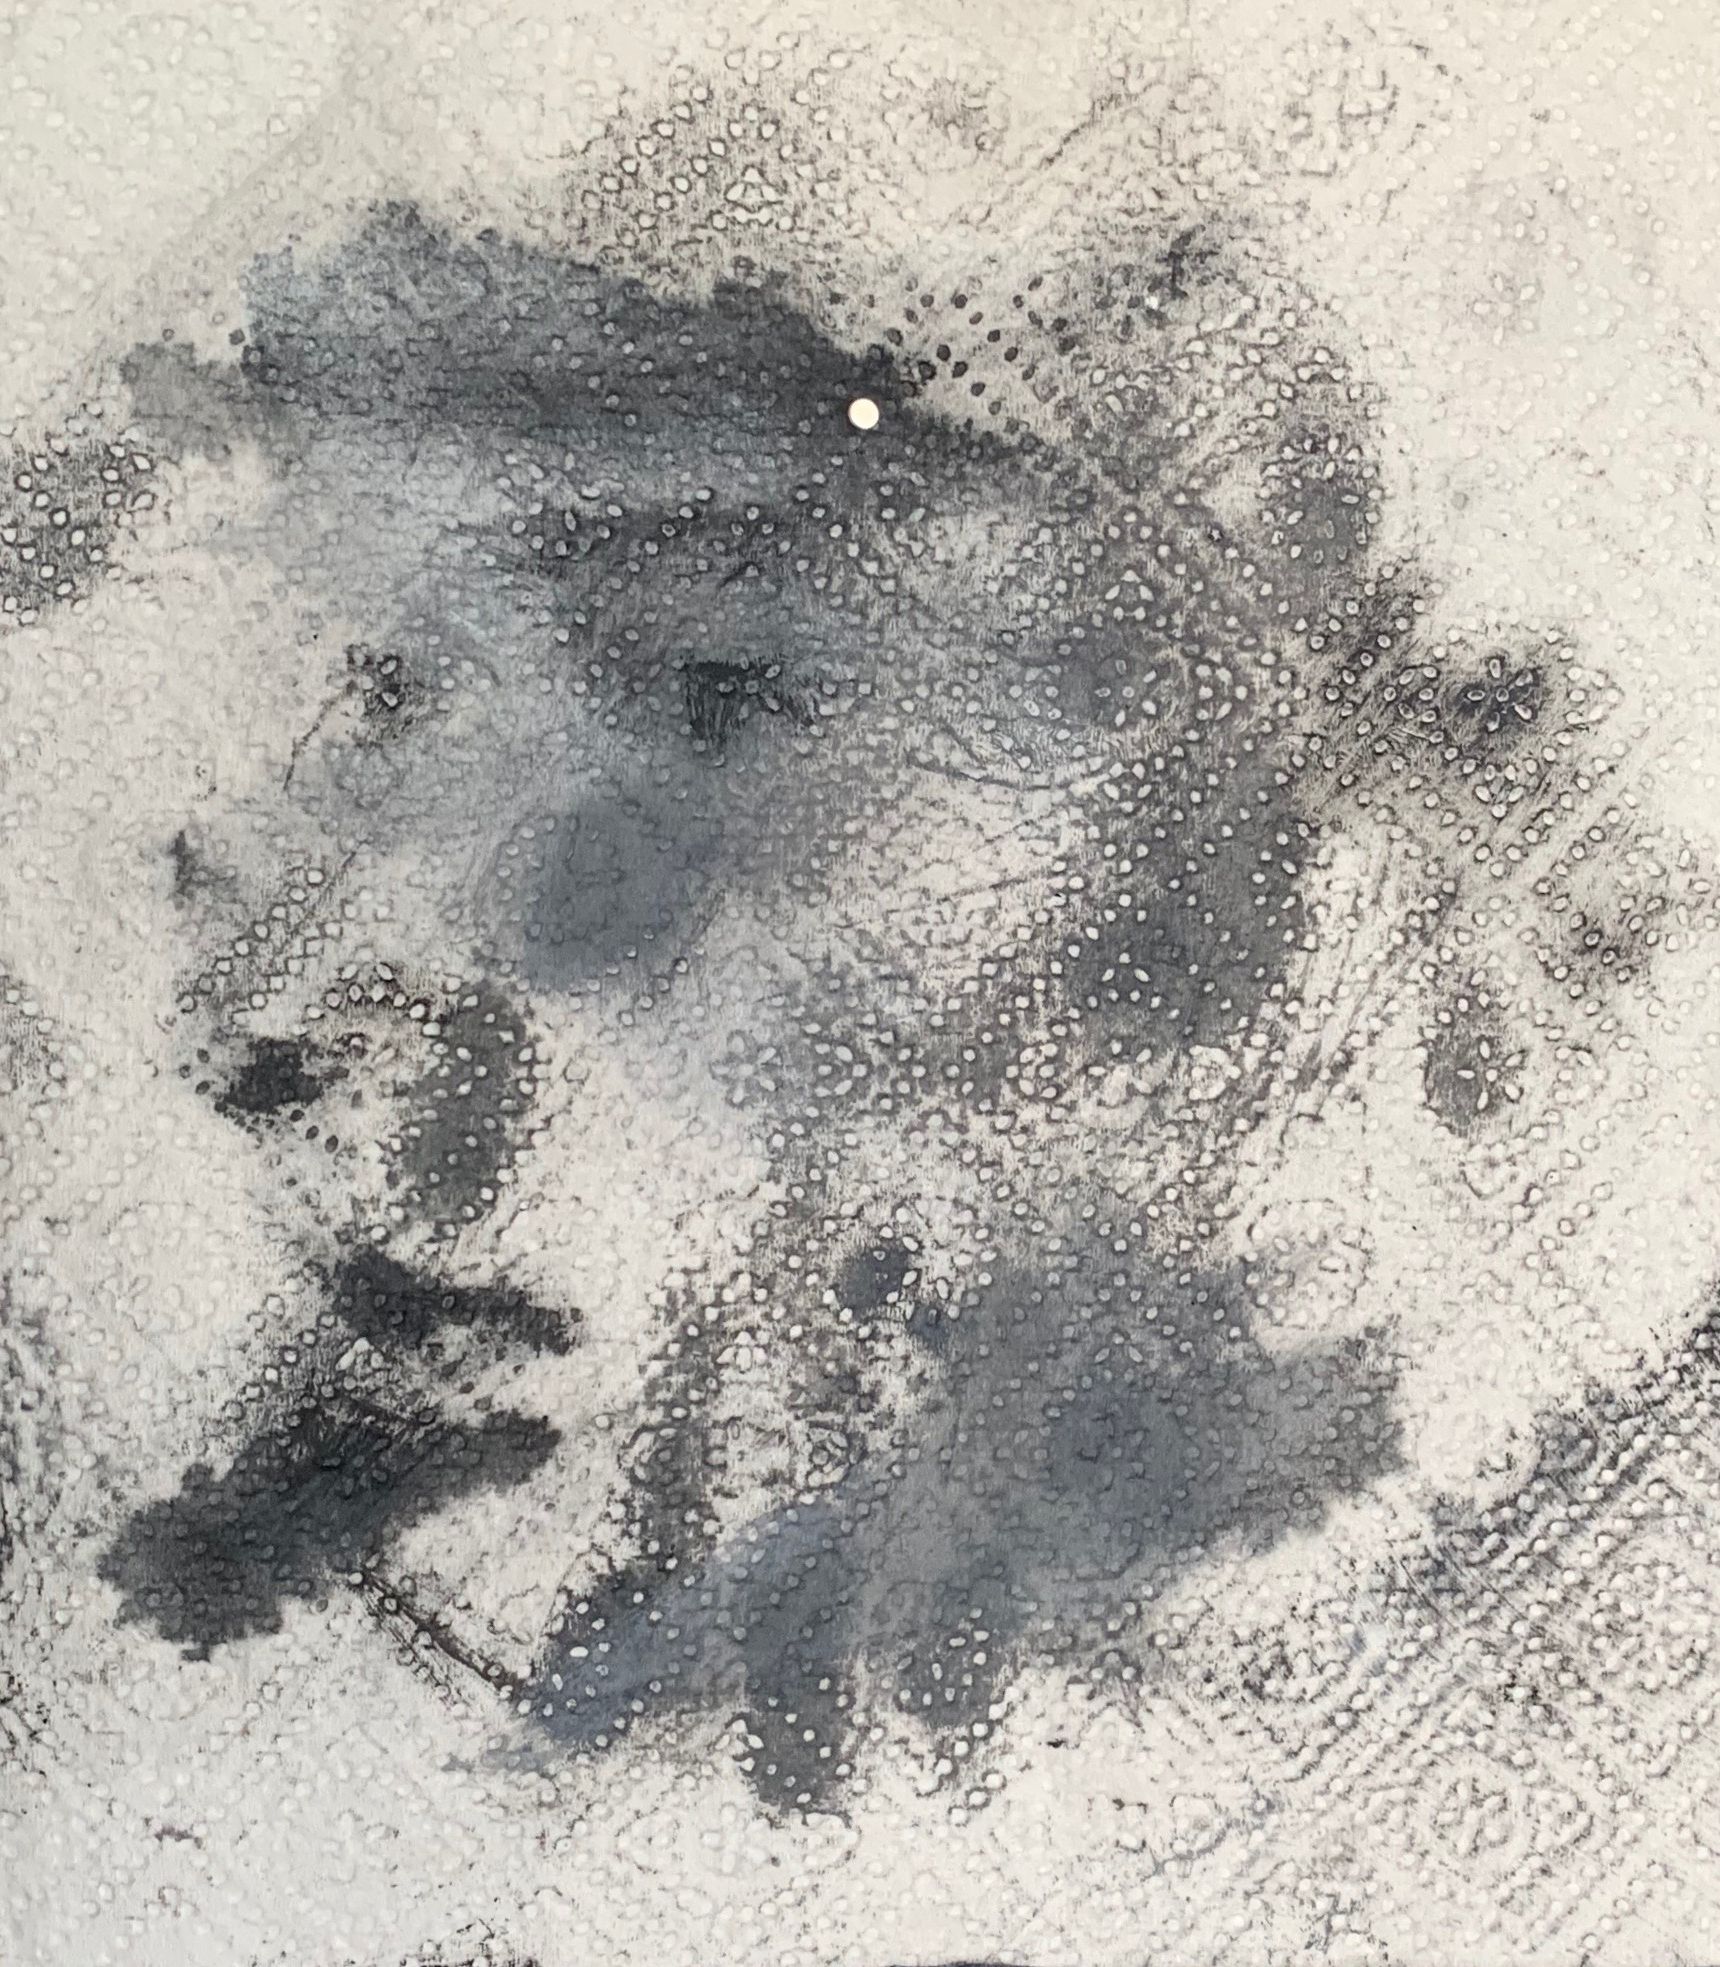 Rafal Bujnowski, Dirty Towel, 2019, oil on paper, 10 1/4 x 9 in. (26.04 x 22.86 cm), RB_FP4172